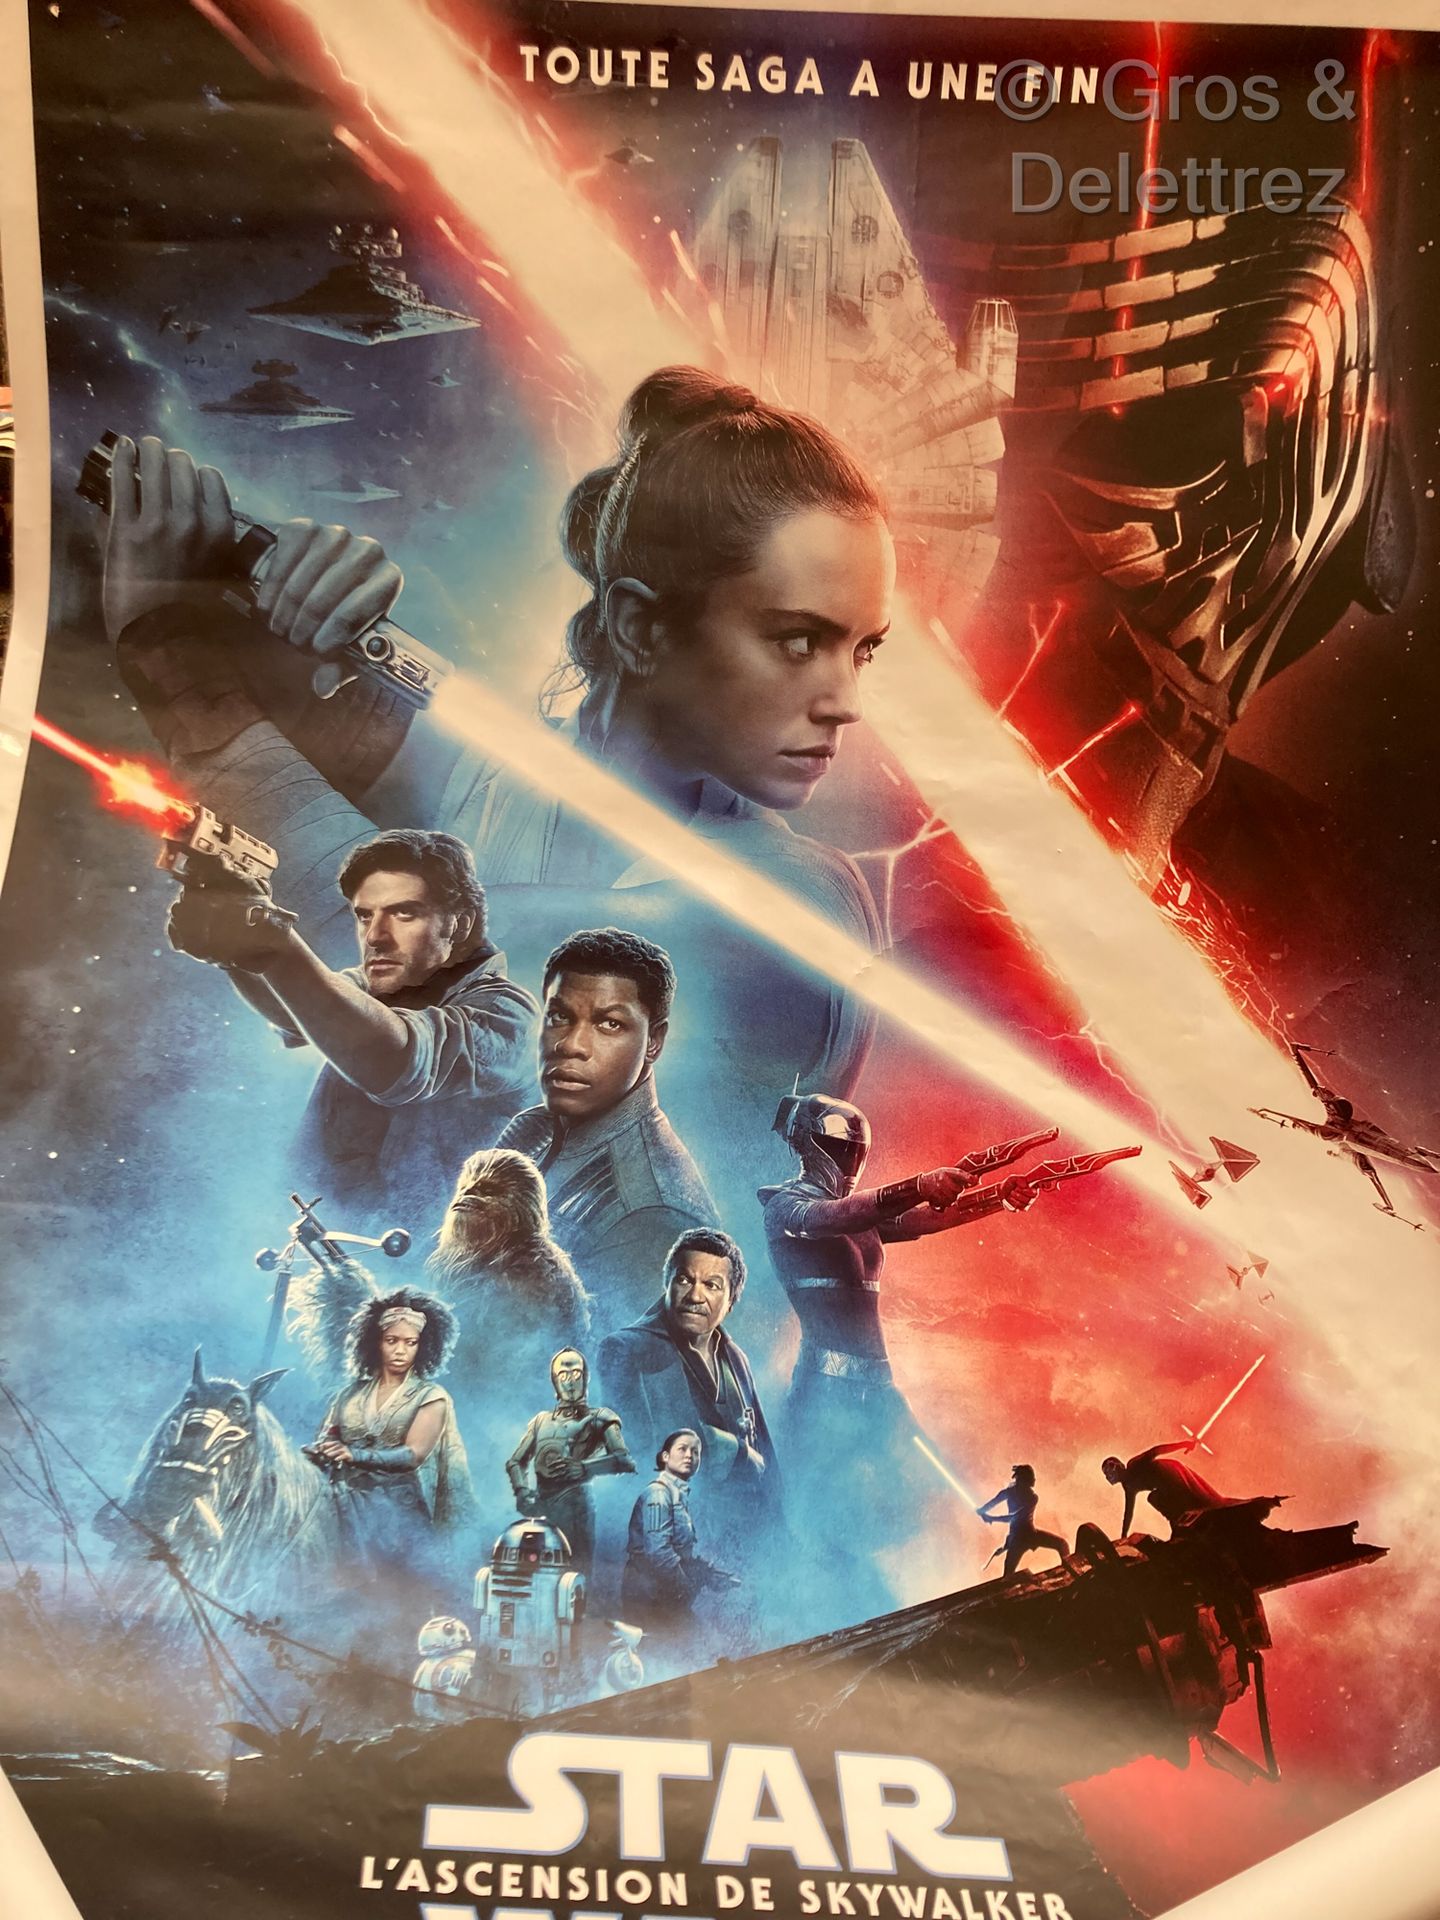 Disney & JJ Abrams Star Wars IX

Filmplakat 159 x 119 cm. Löcher